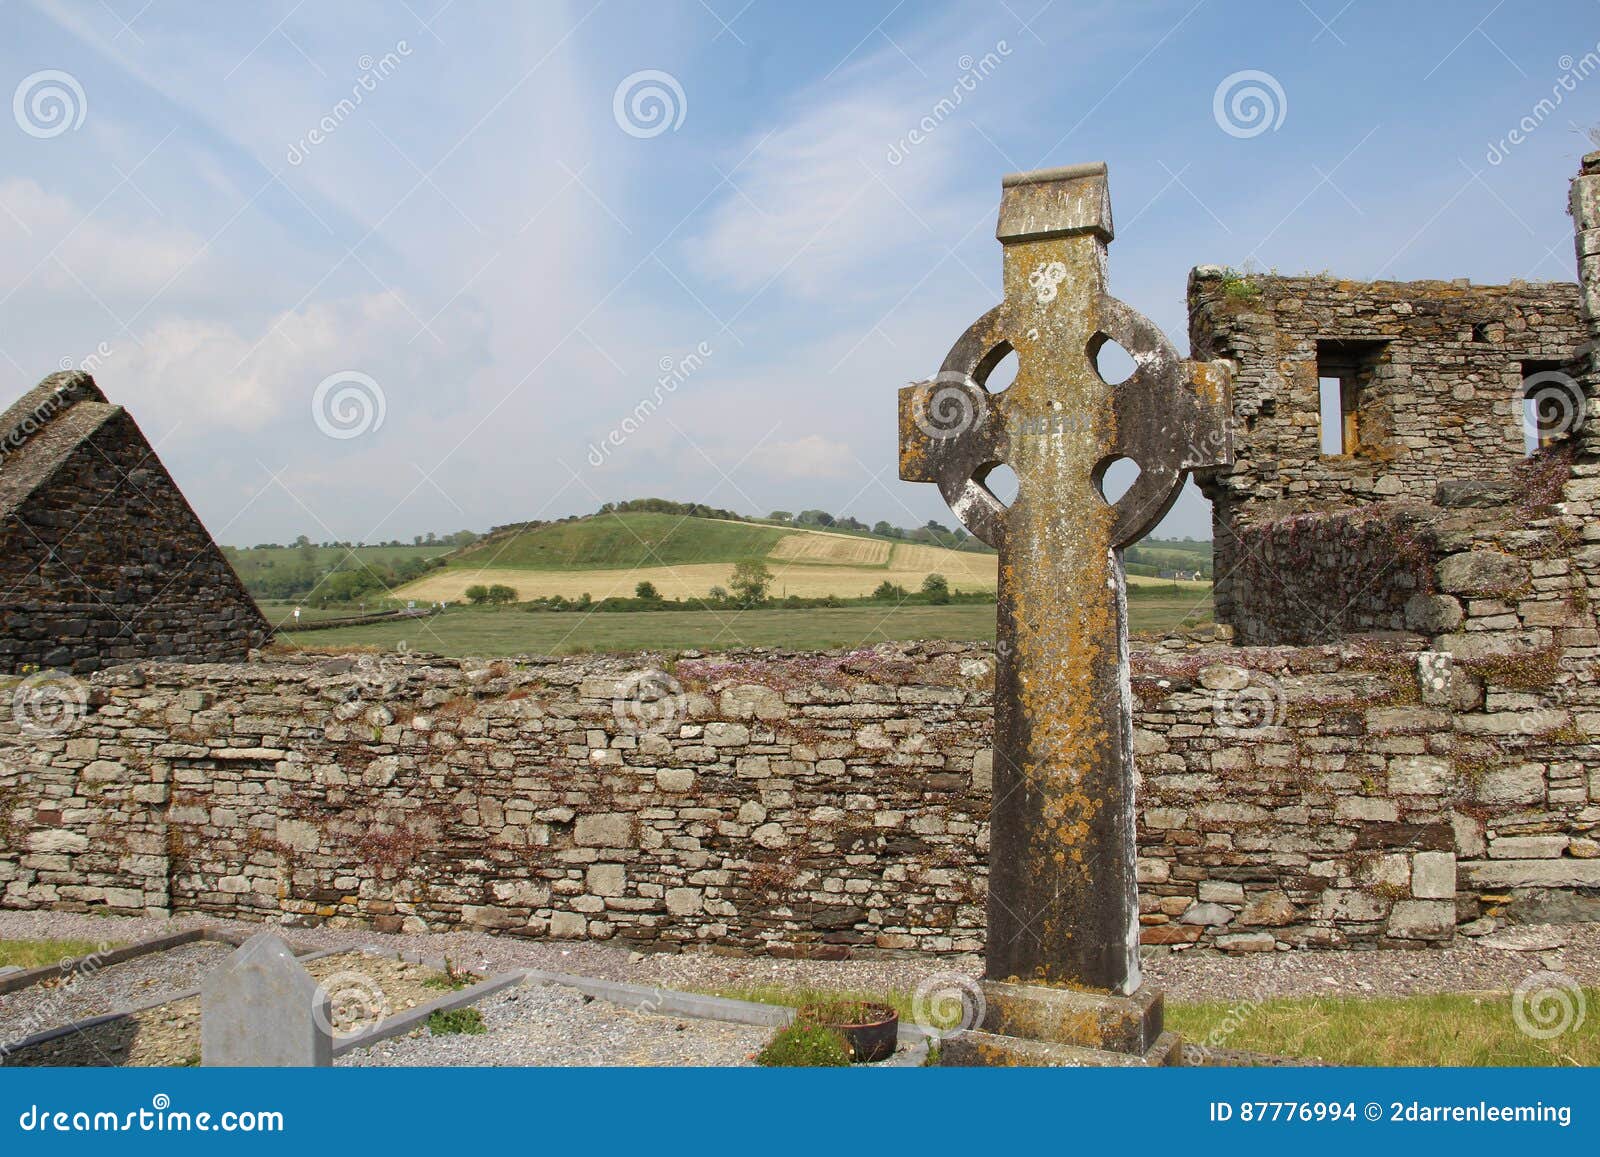 celtic-cross-found-along-wild-atlantic-way-background-green-landscape-ireland-location-west-cork-timoleague-abbey-87776994.jpg